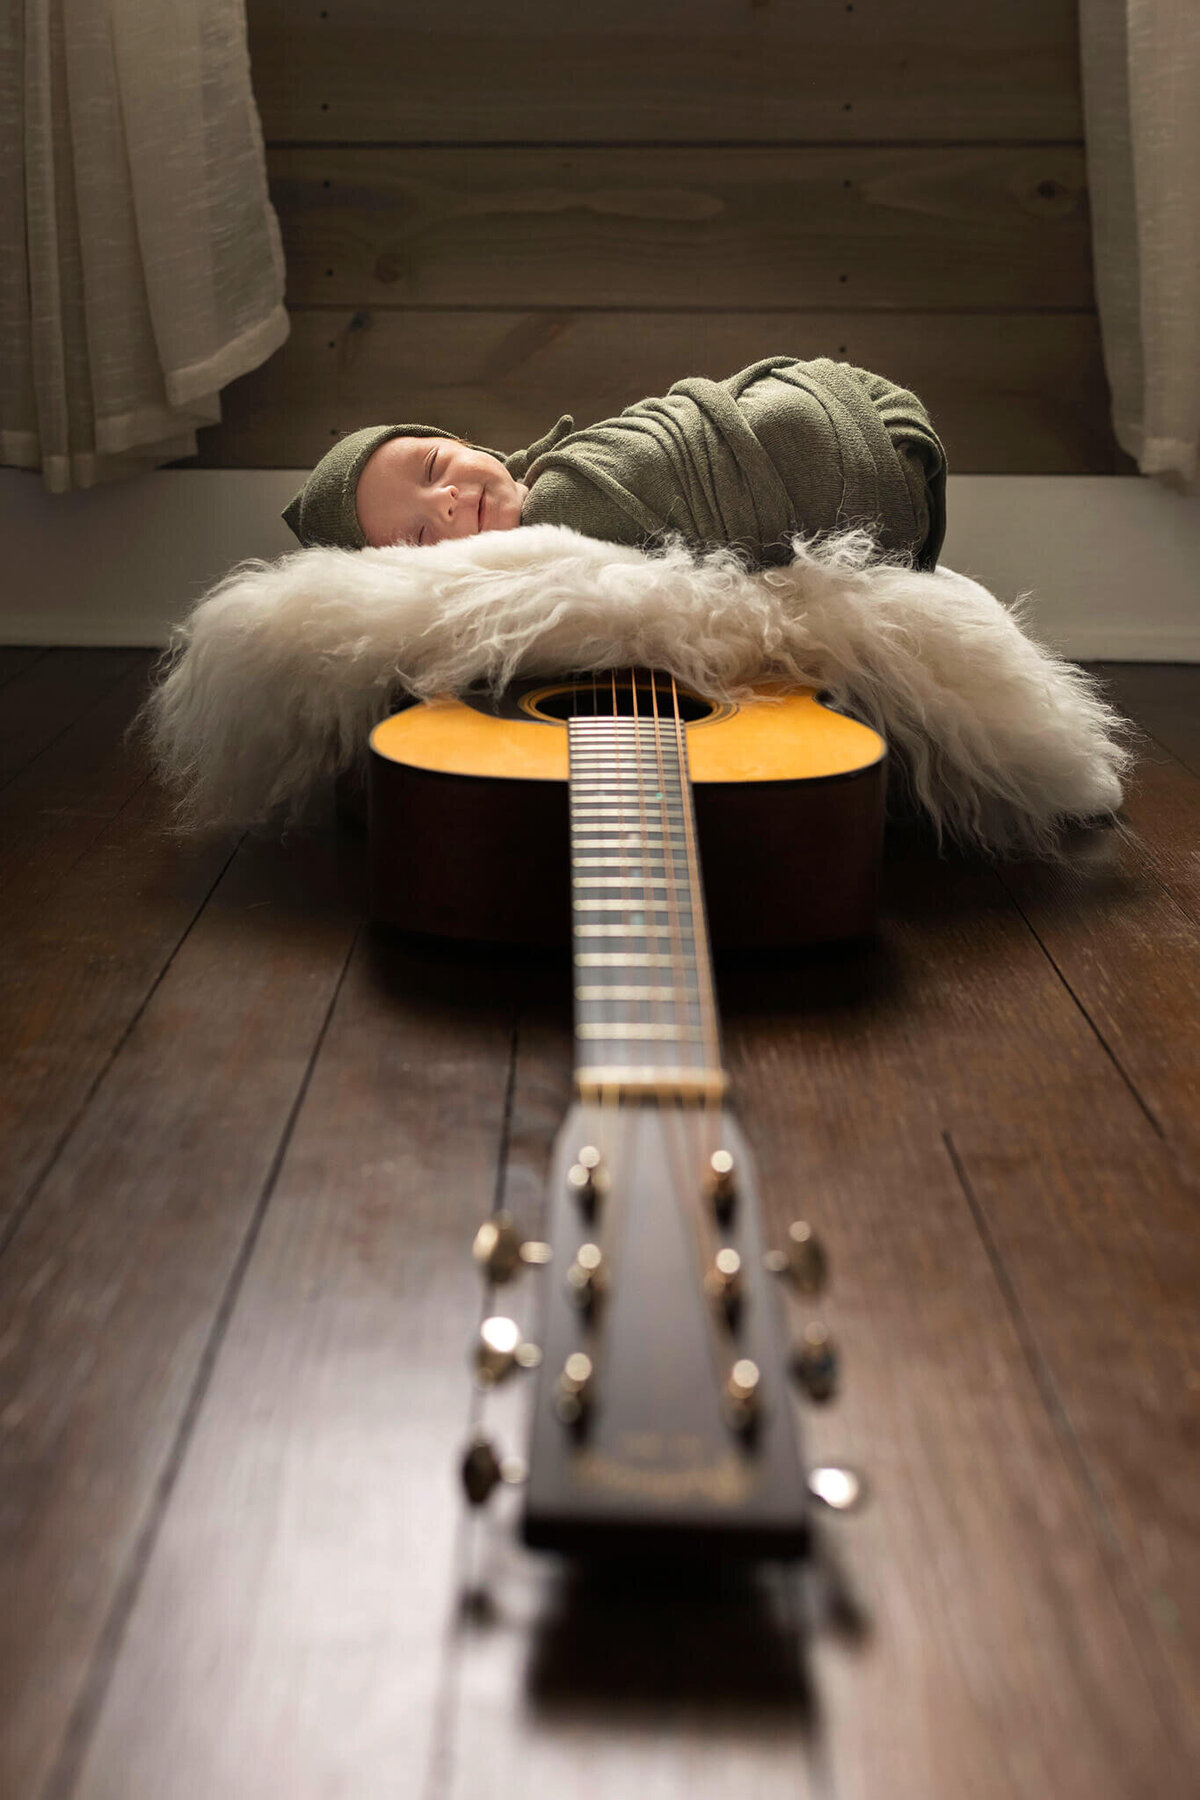 NJ Newborn photos of baby on guitar